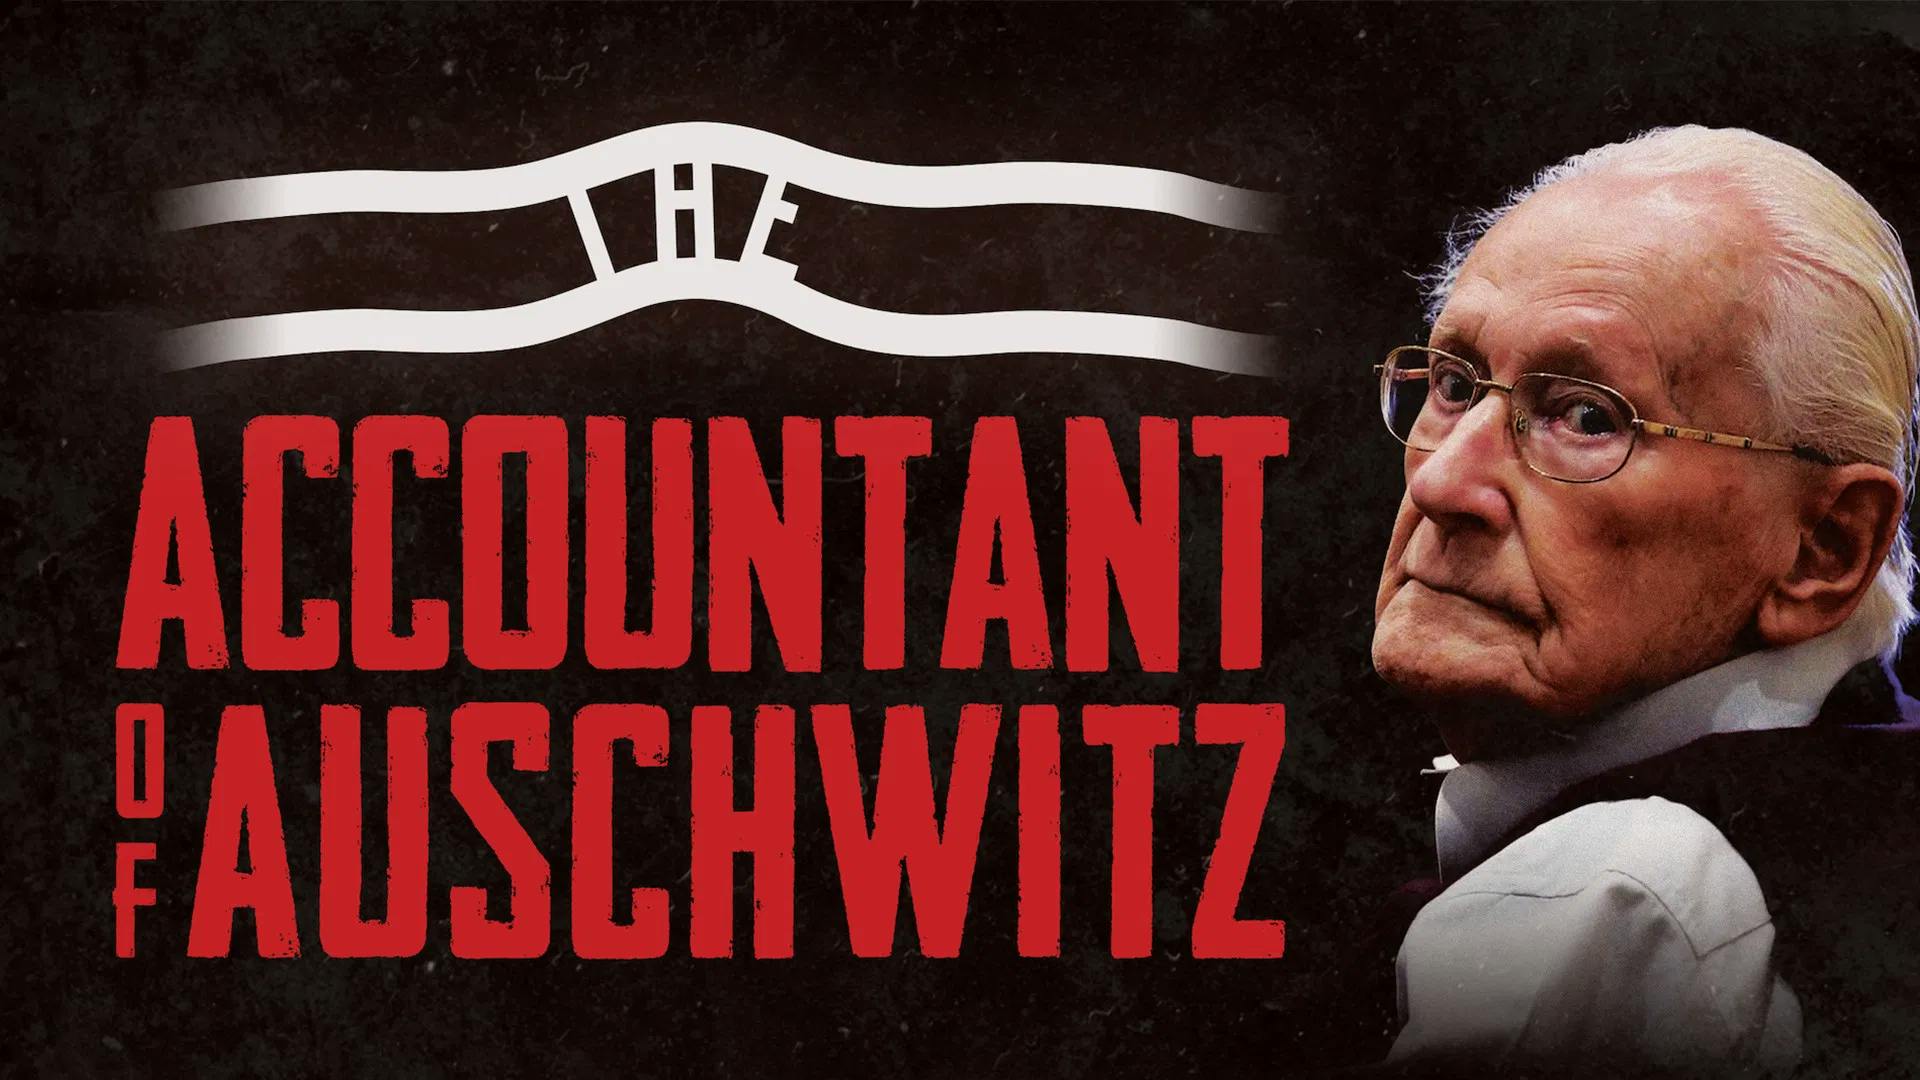 The Accountant of Auschwitz | poster HorizontalMini